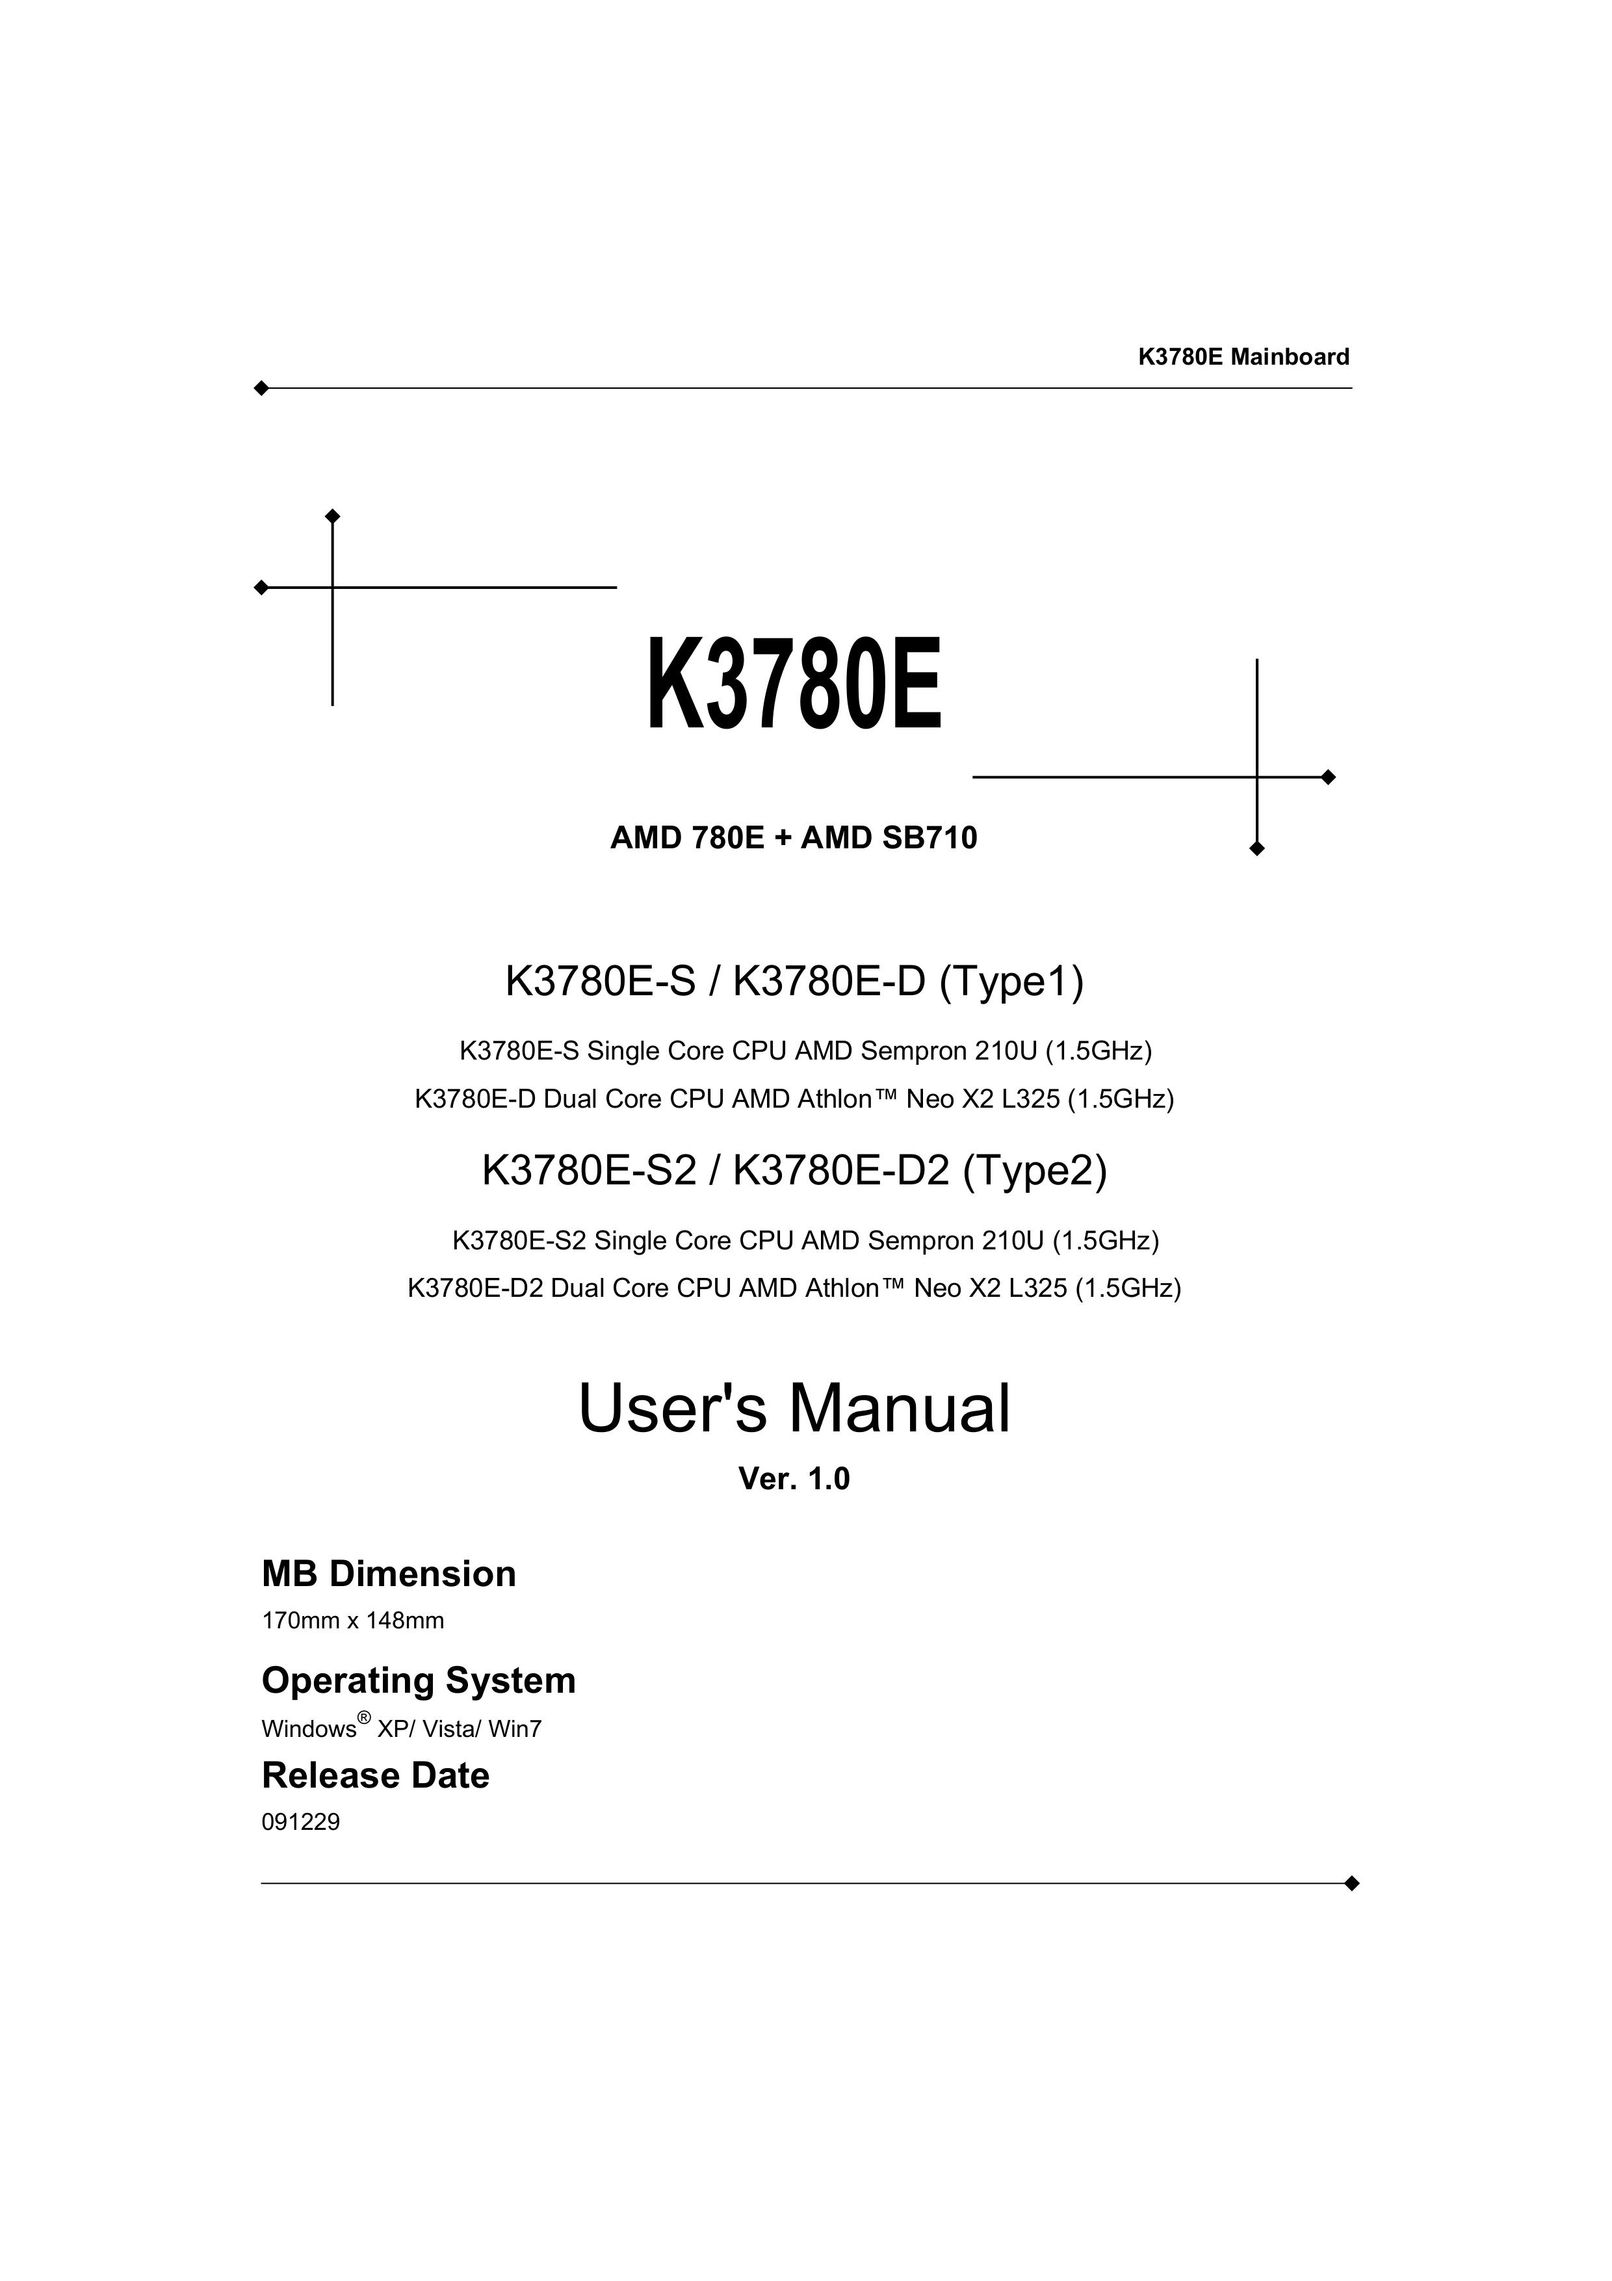 AMD K3780E-D2 Computer Hardware User Manual